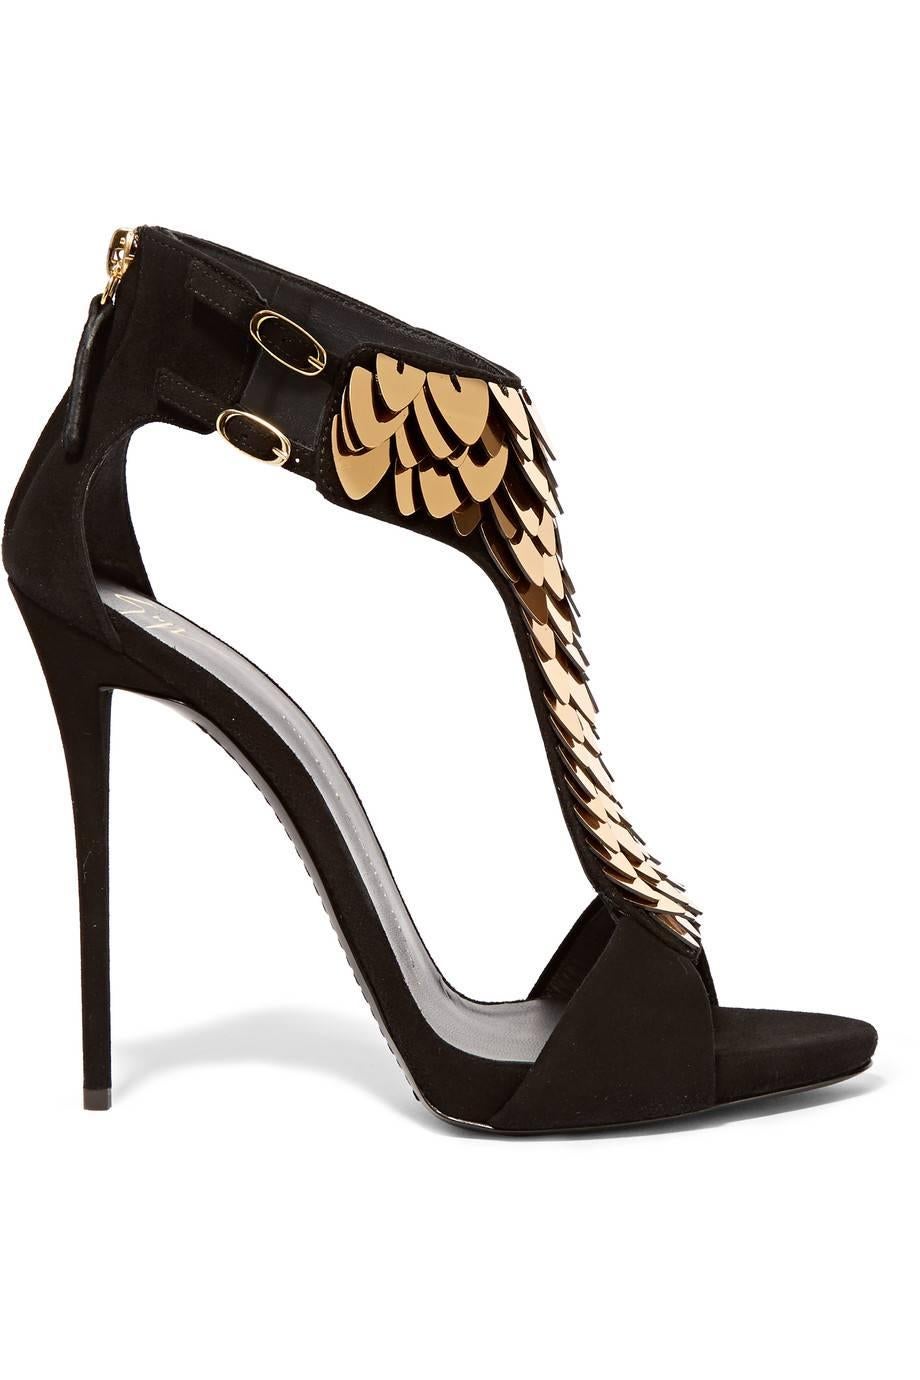 Women's Giuseppe Zanotti NEW Black Suede Gold Sequin High Heels Sandals in Box